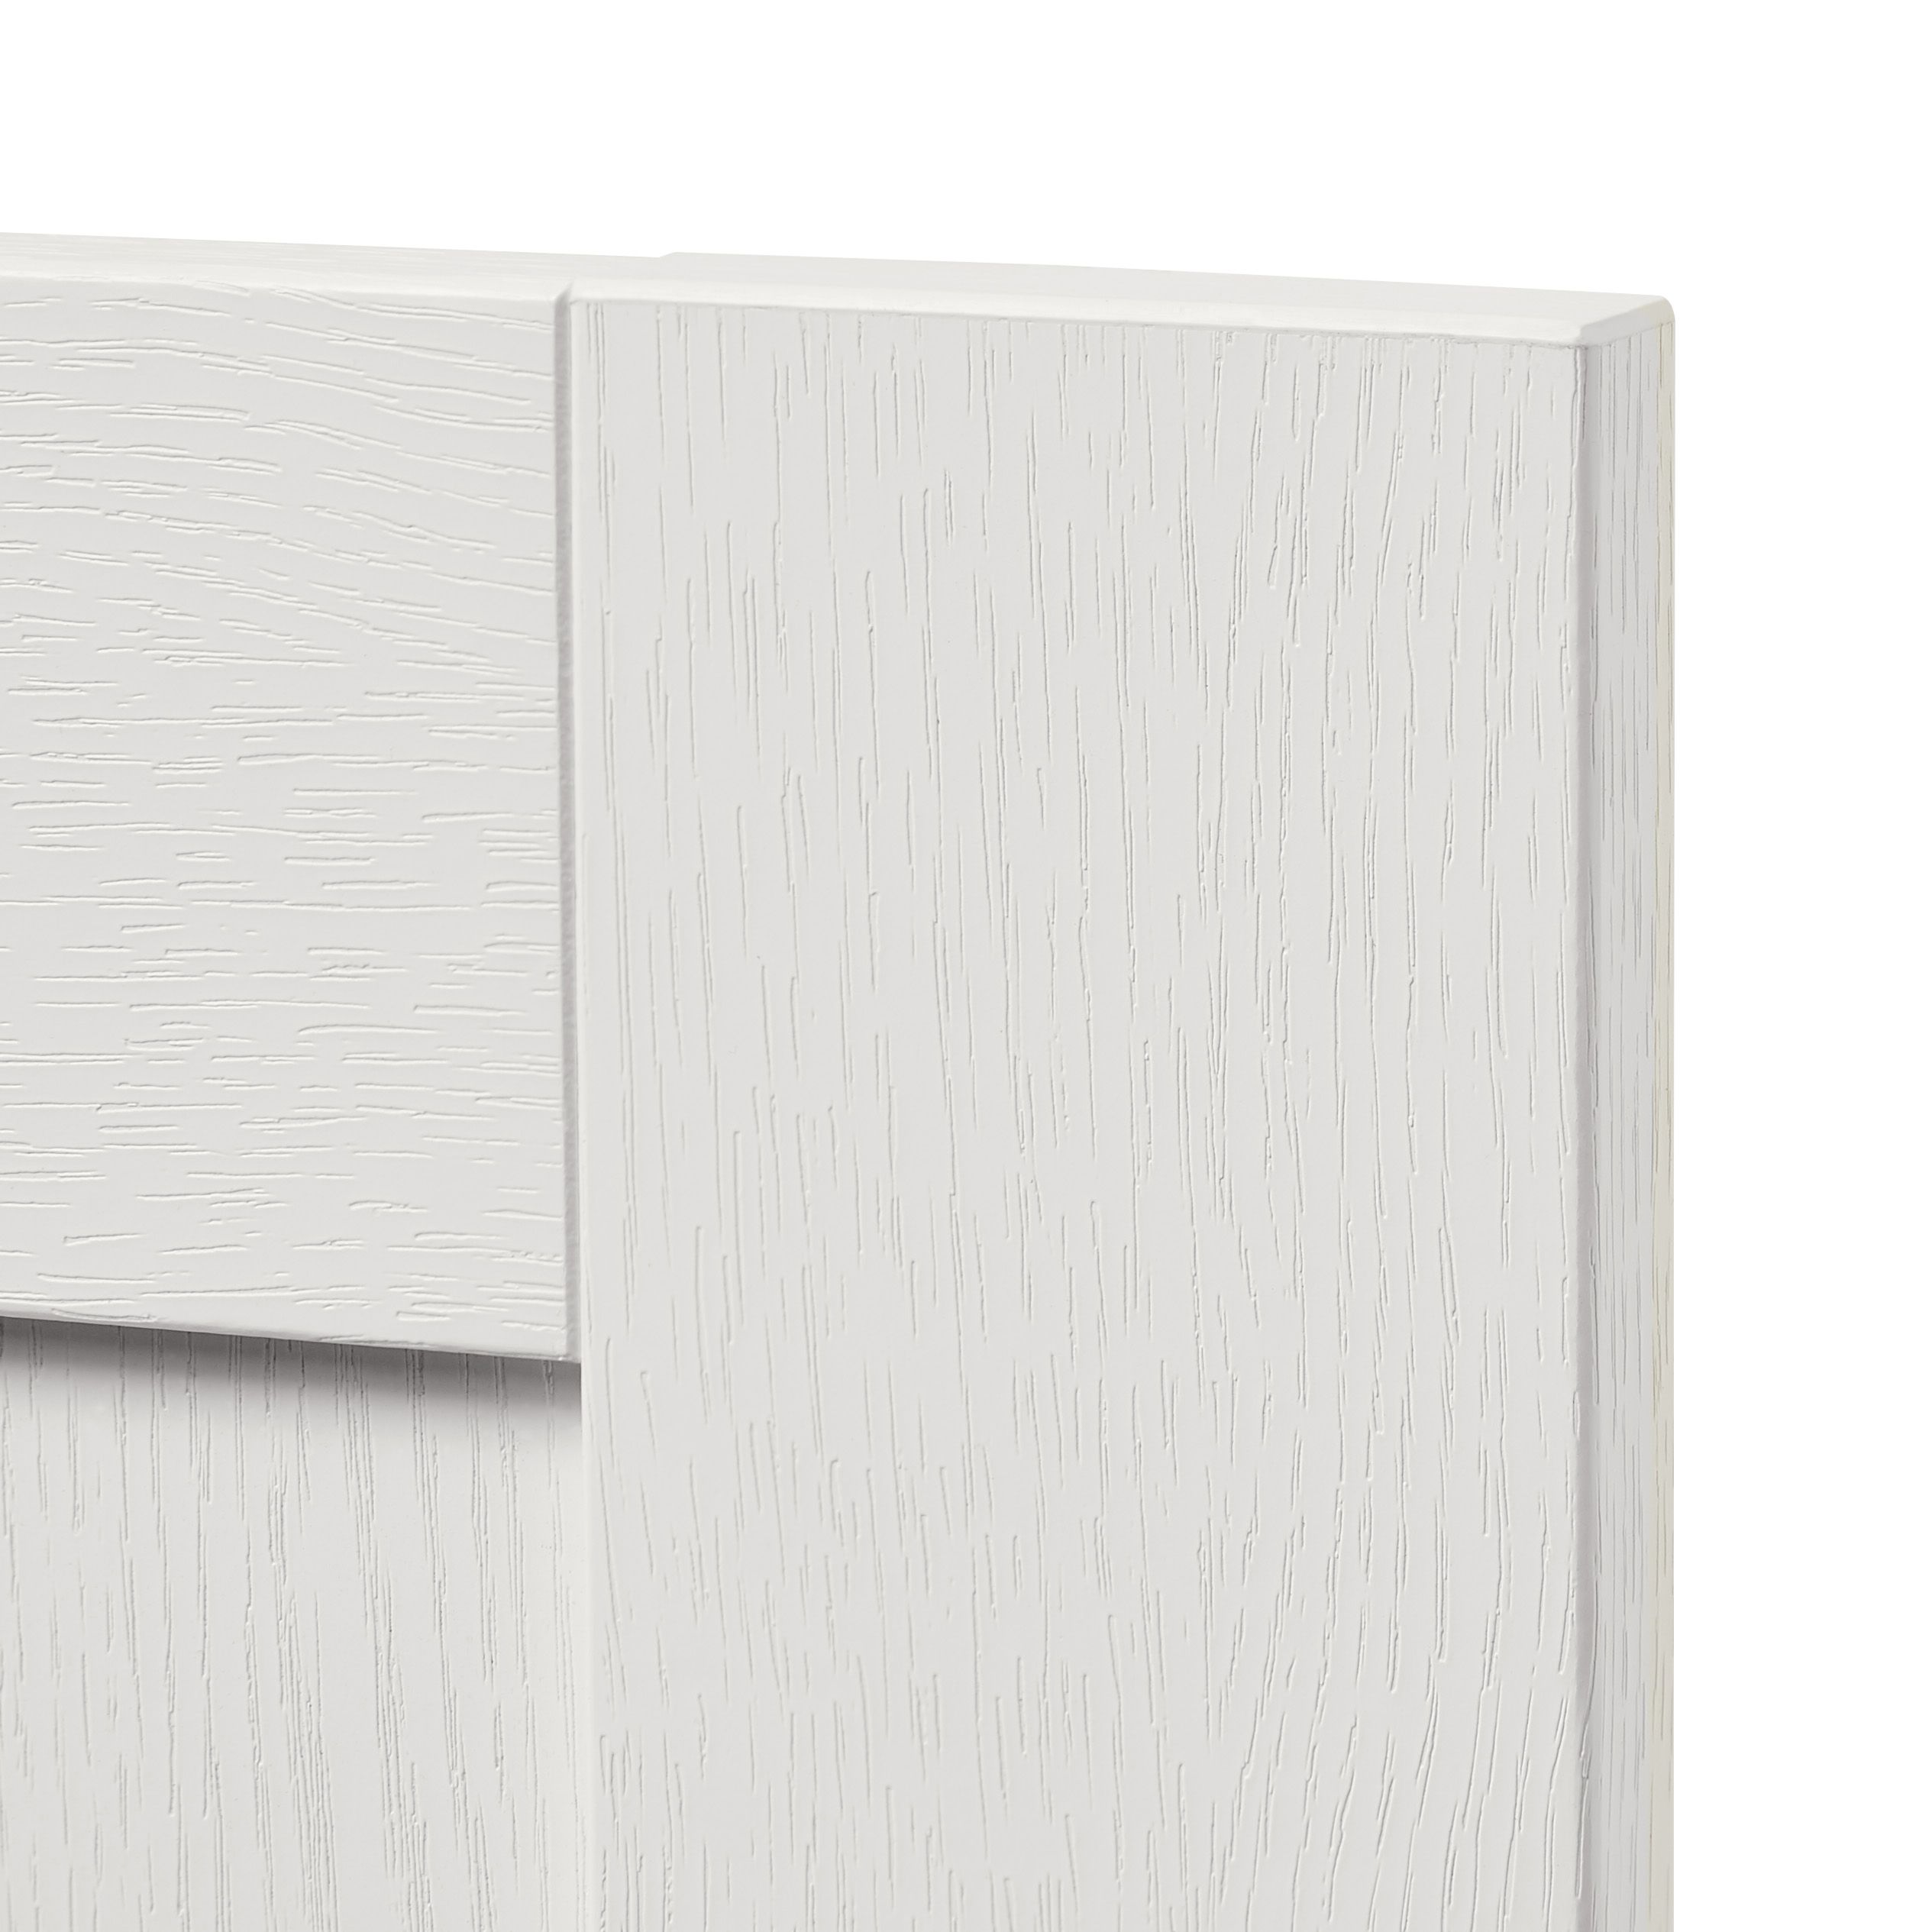 GoodHome Alpinia Matt ivory painted wood effect shaker Drawer front, bridging door & bi fold door, (W)800mm (H)356mm (T)18mm